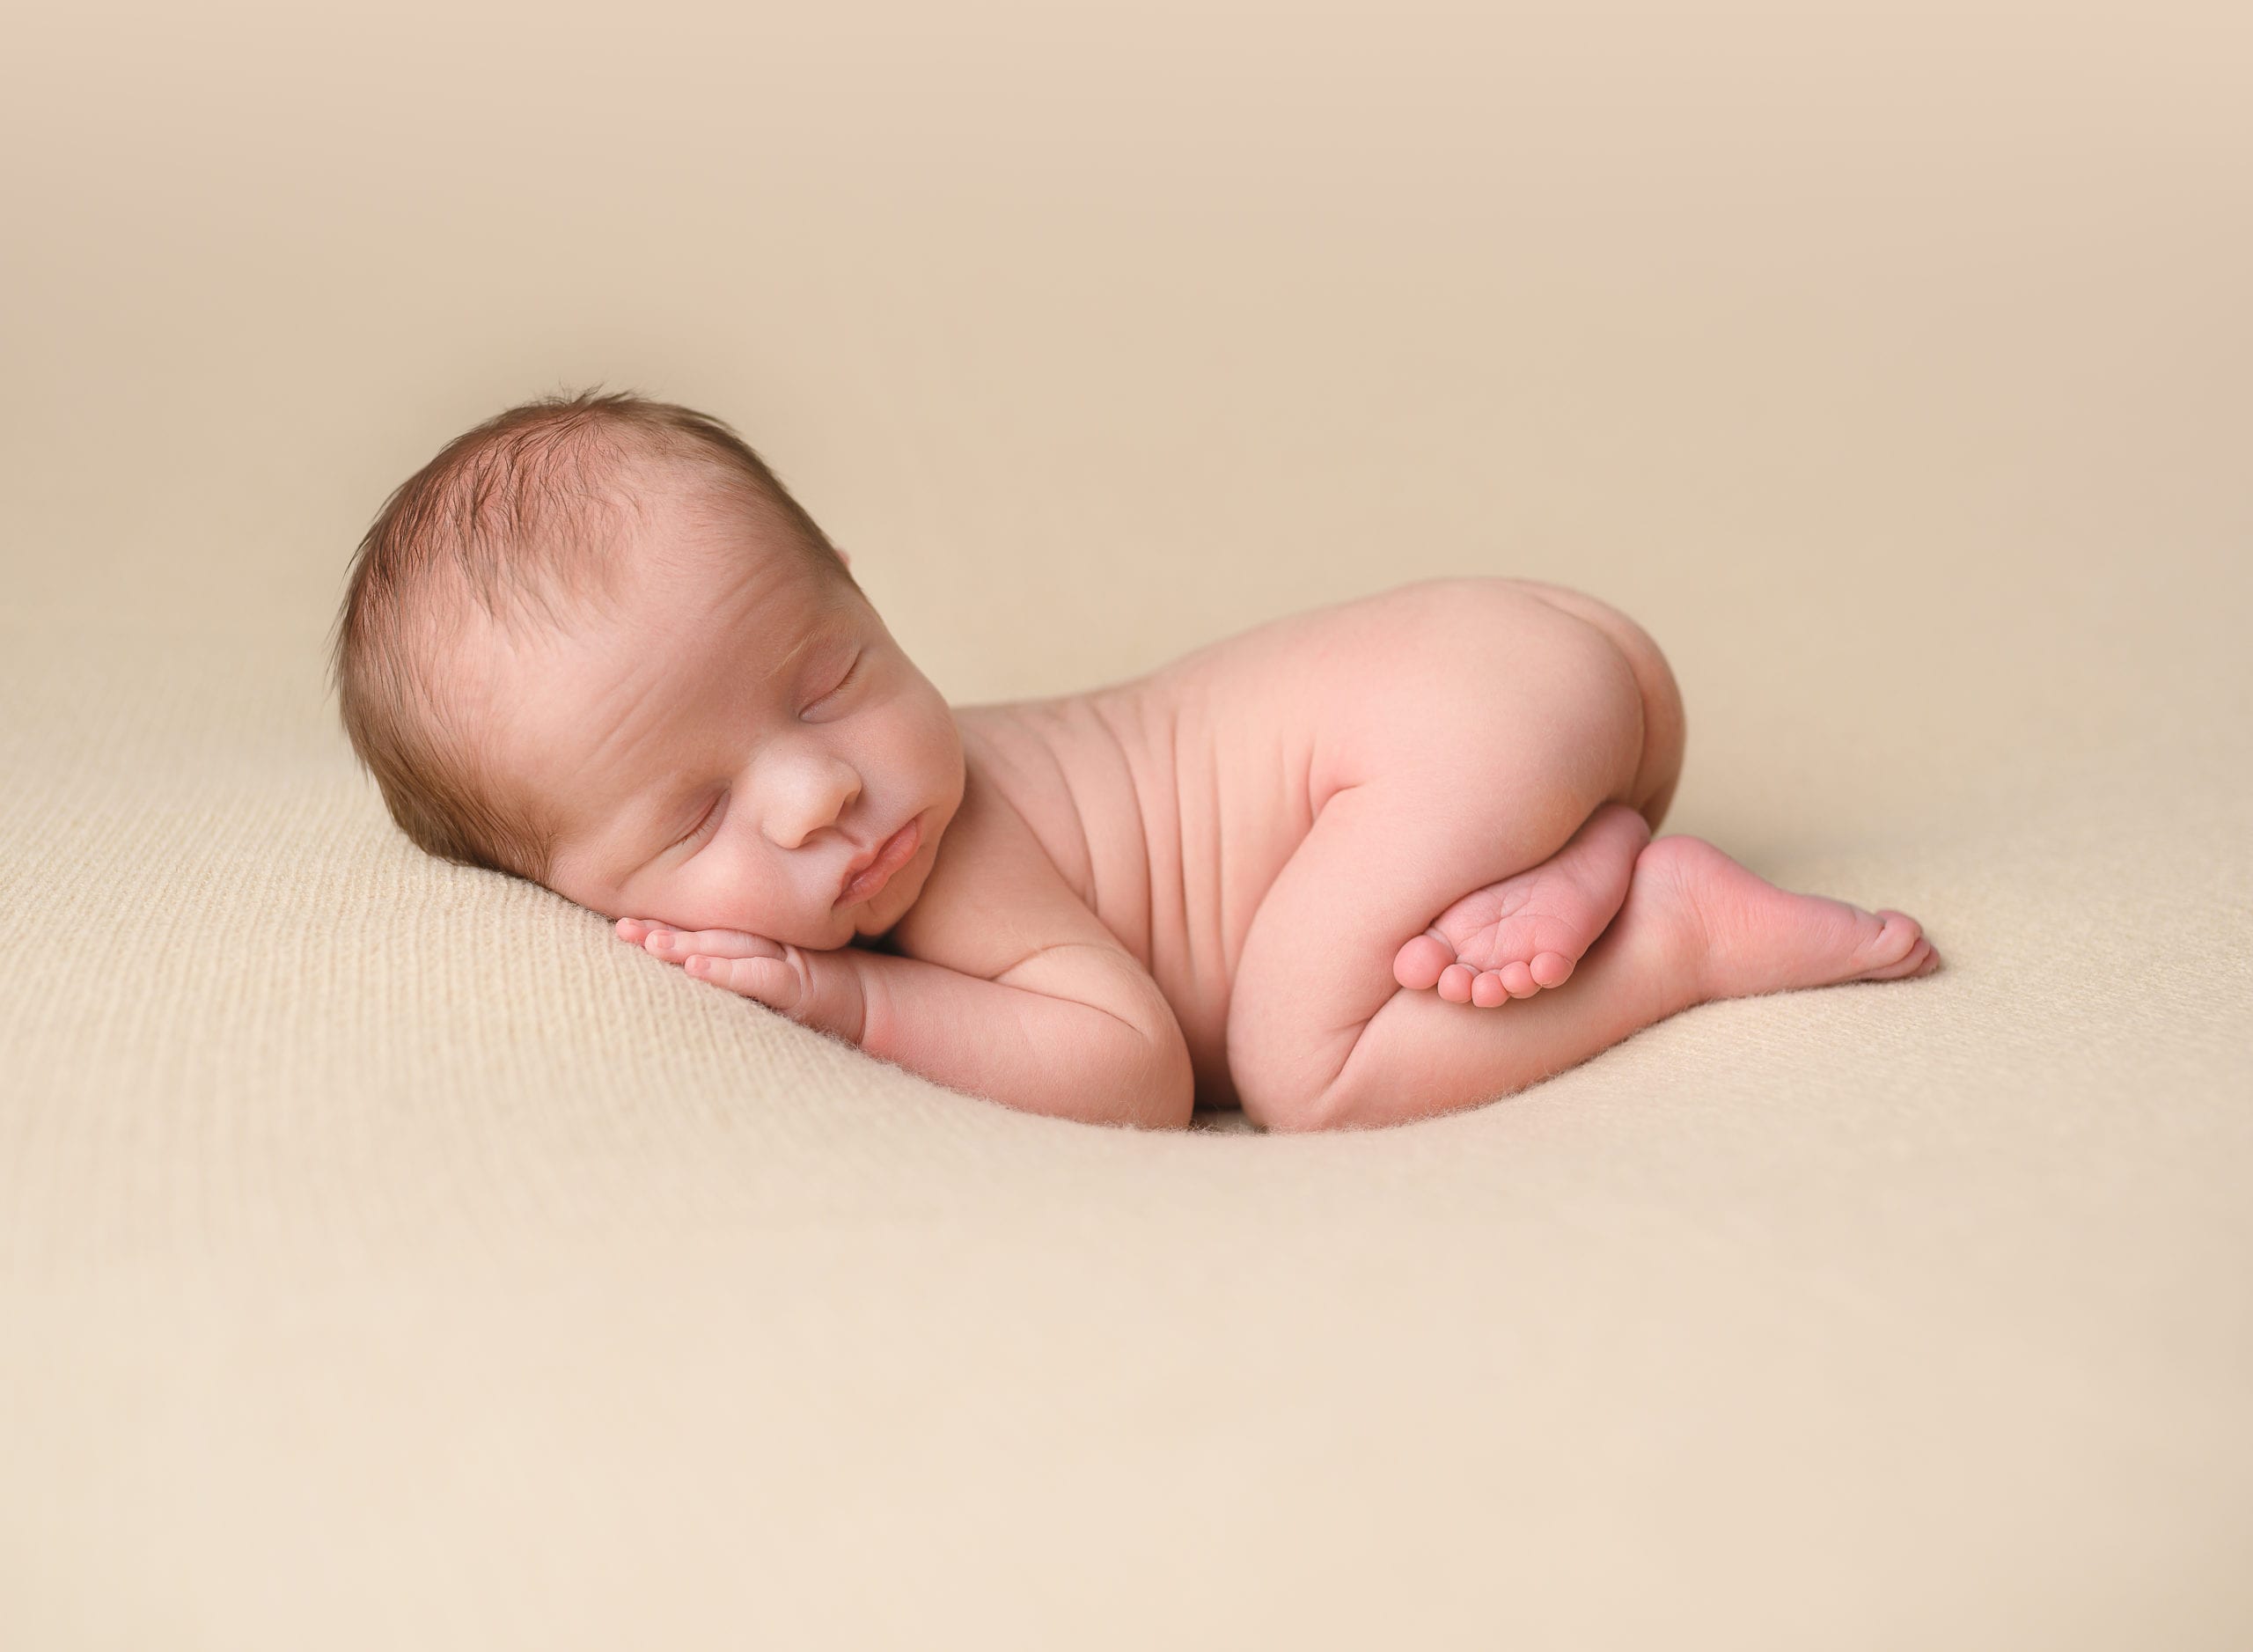 Sleeping baby photo by Hello Photography